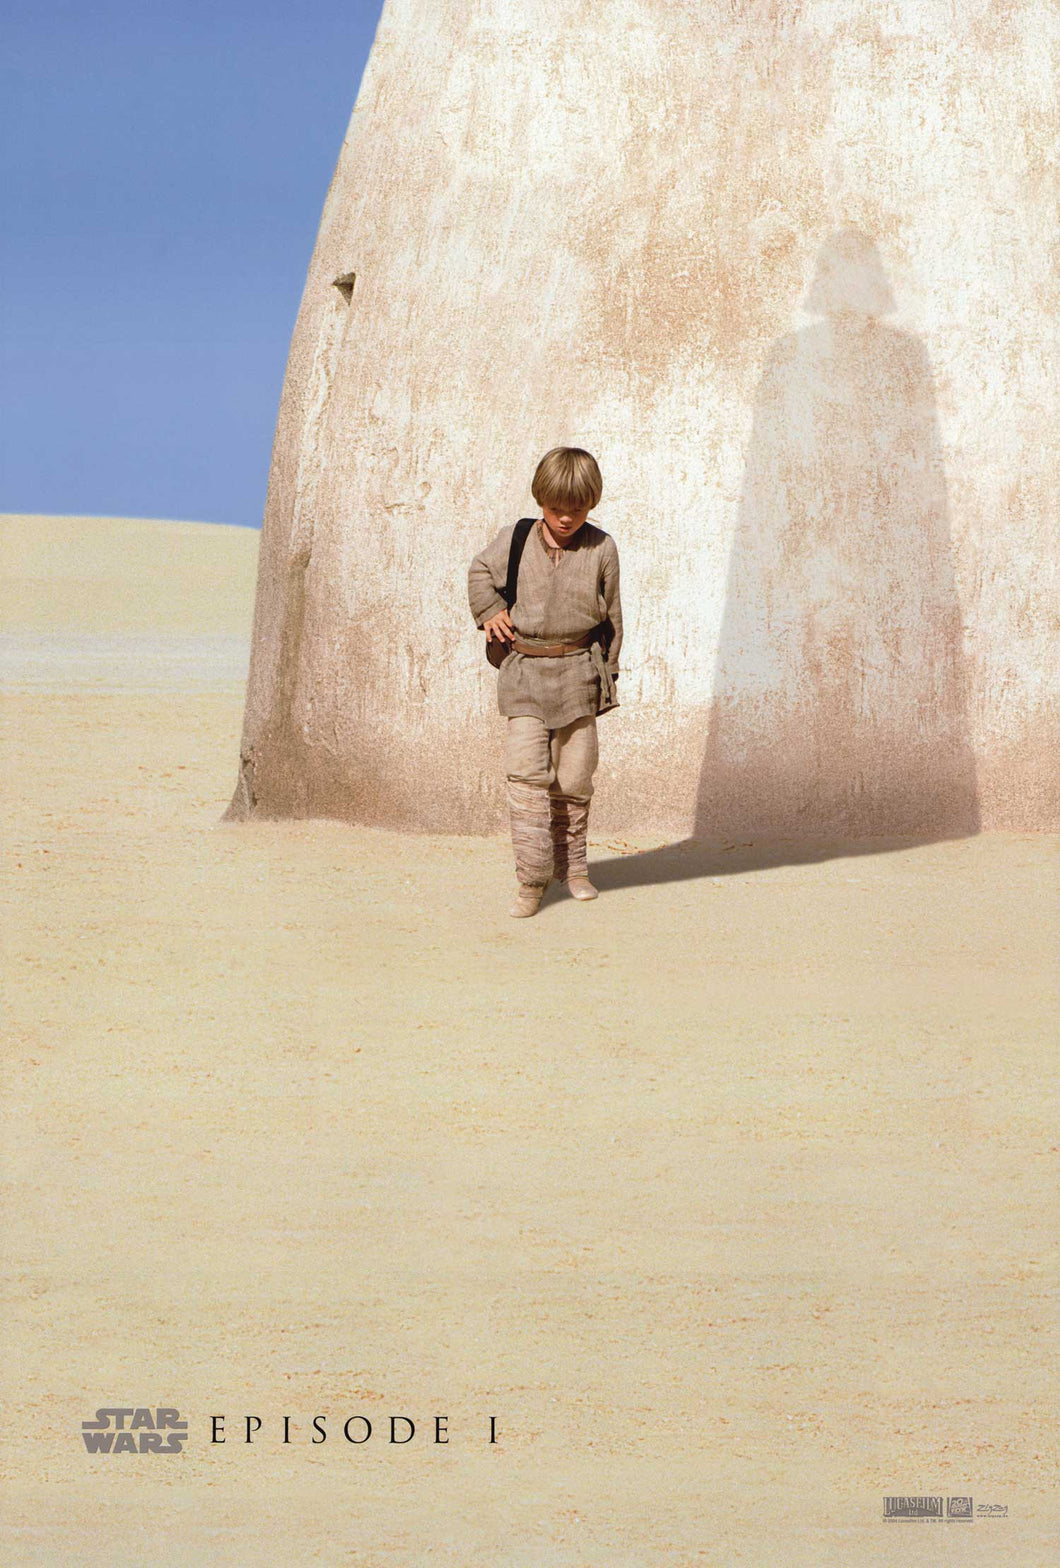 Star Wars Episode 1 Movie Poster Framed or Unframed Glossy Poster Free UK Shipping!!!